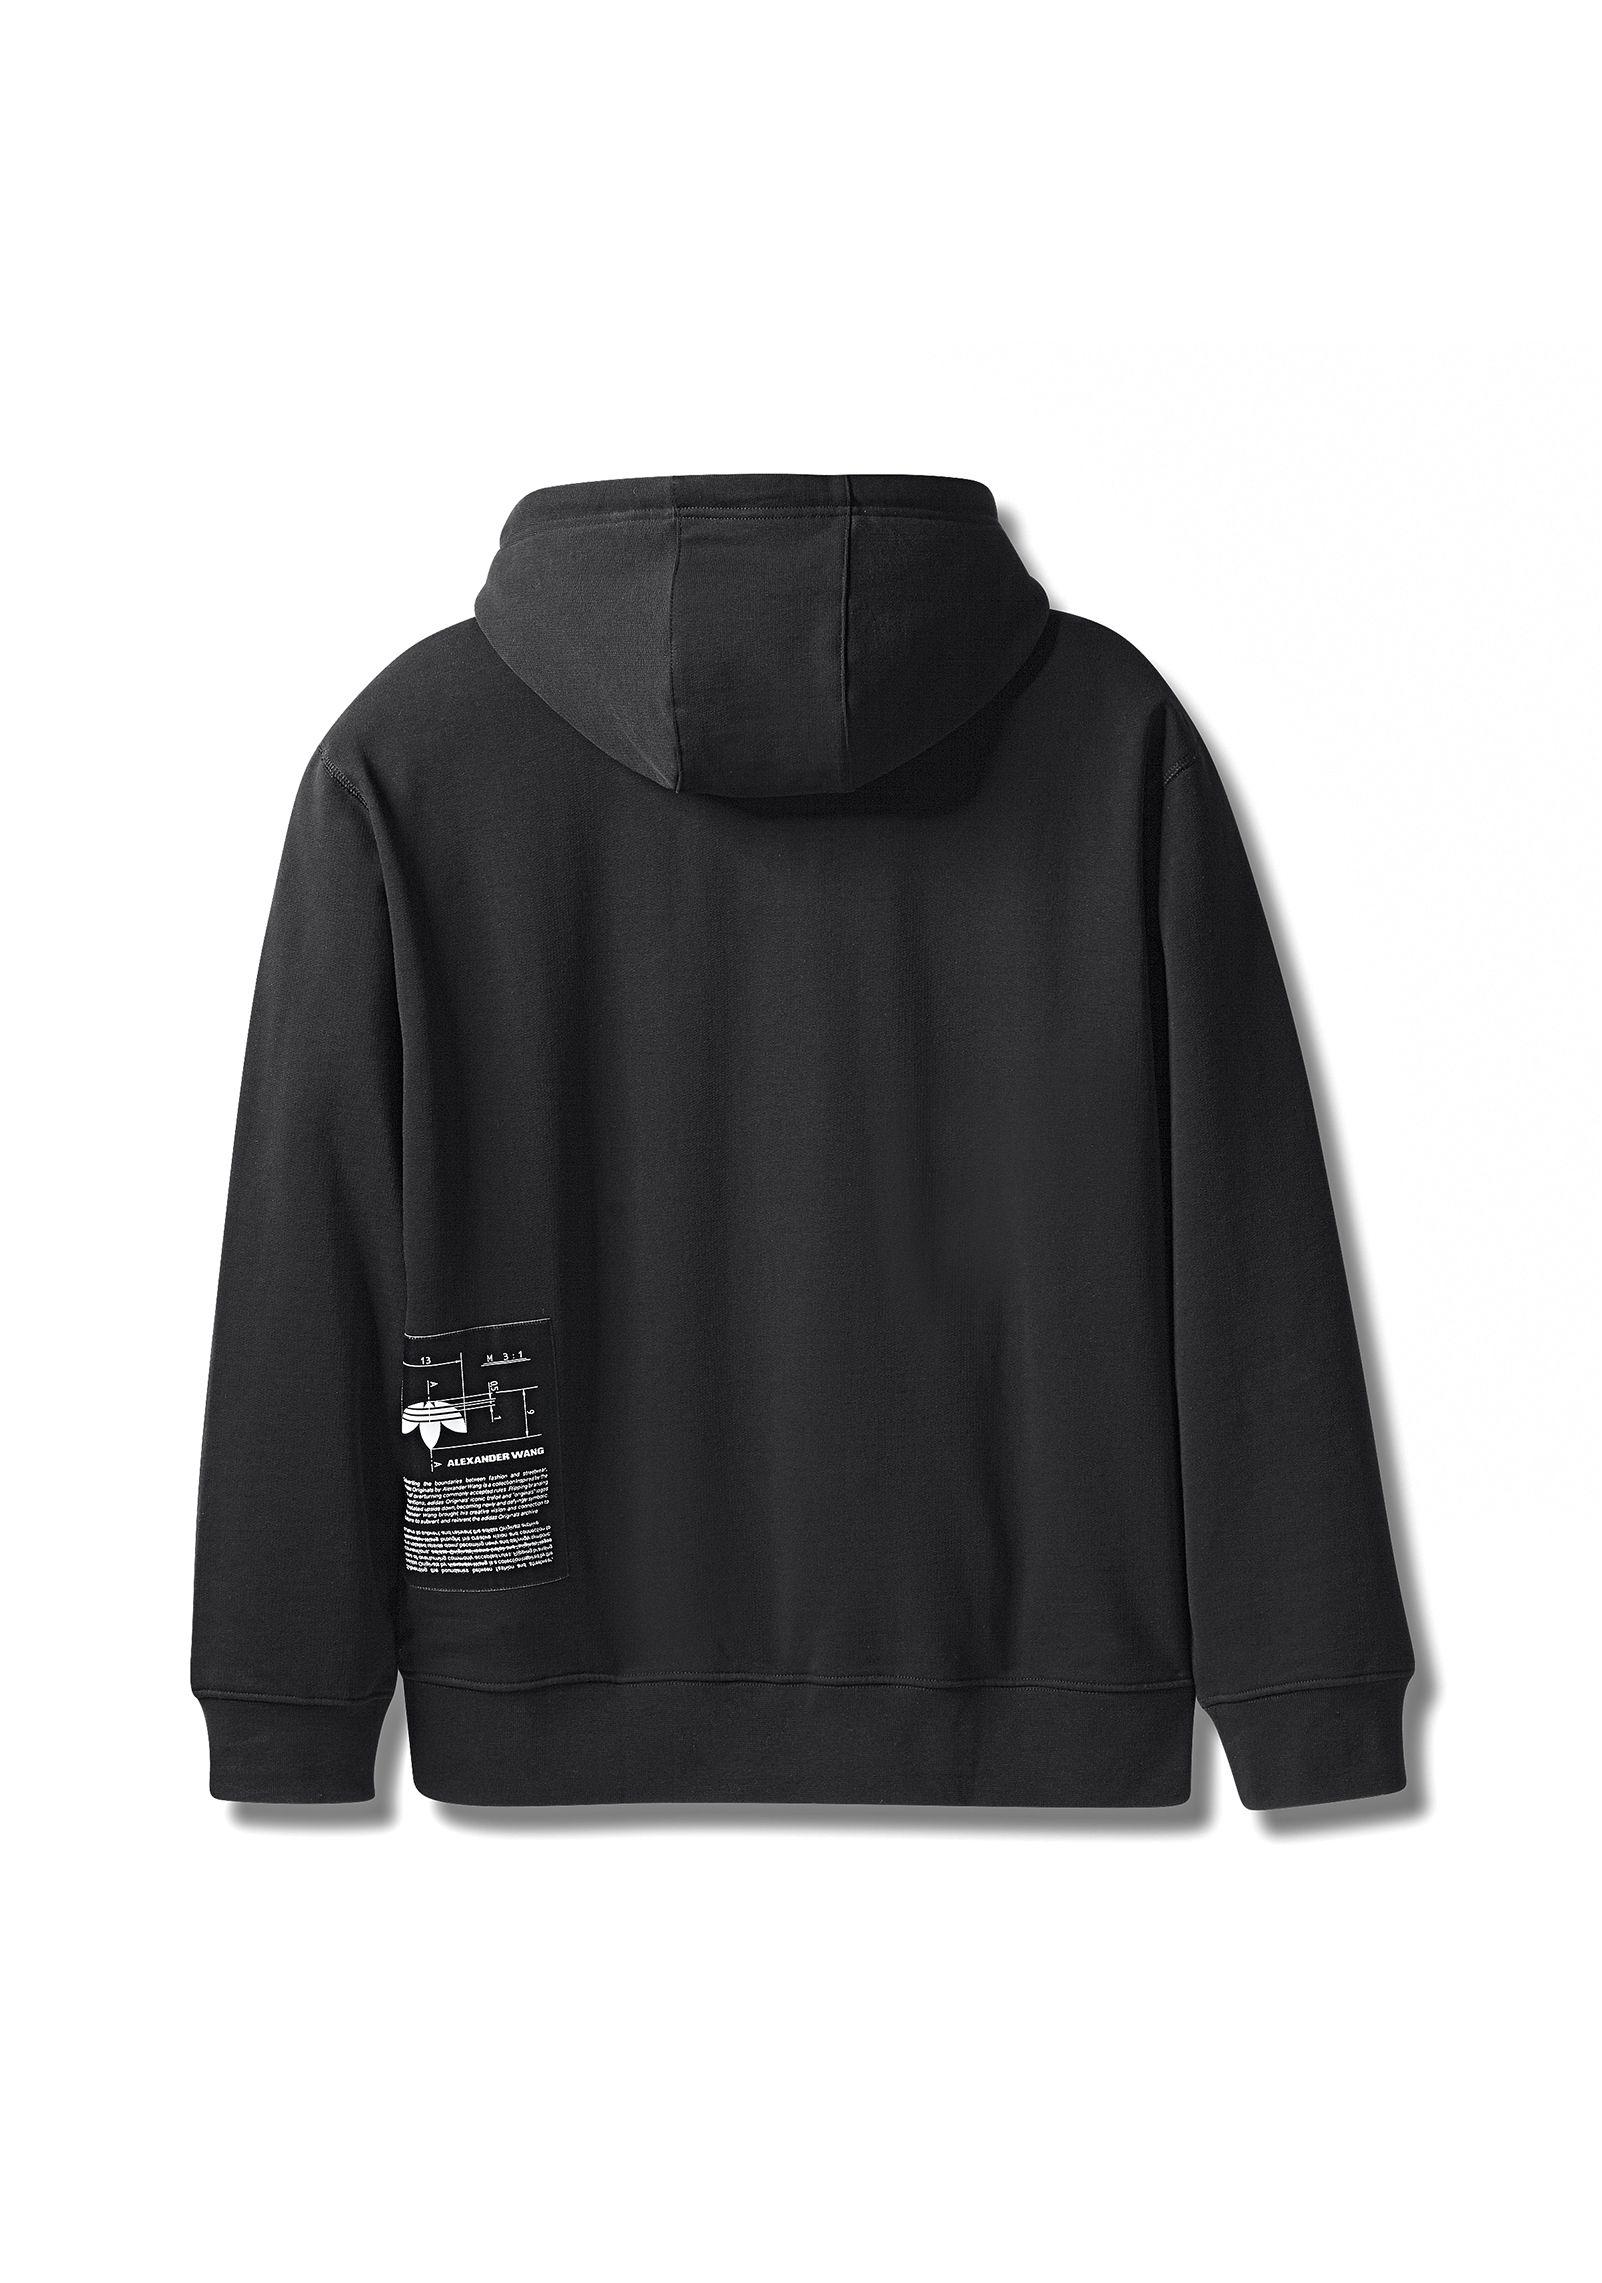 Alexander Wang Adidas Originals By Aw Logo Hoodie in Black for Men